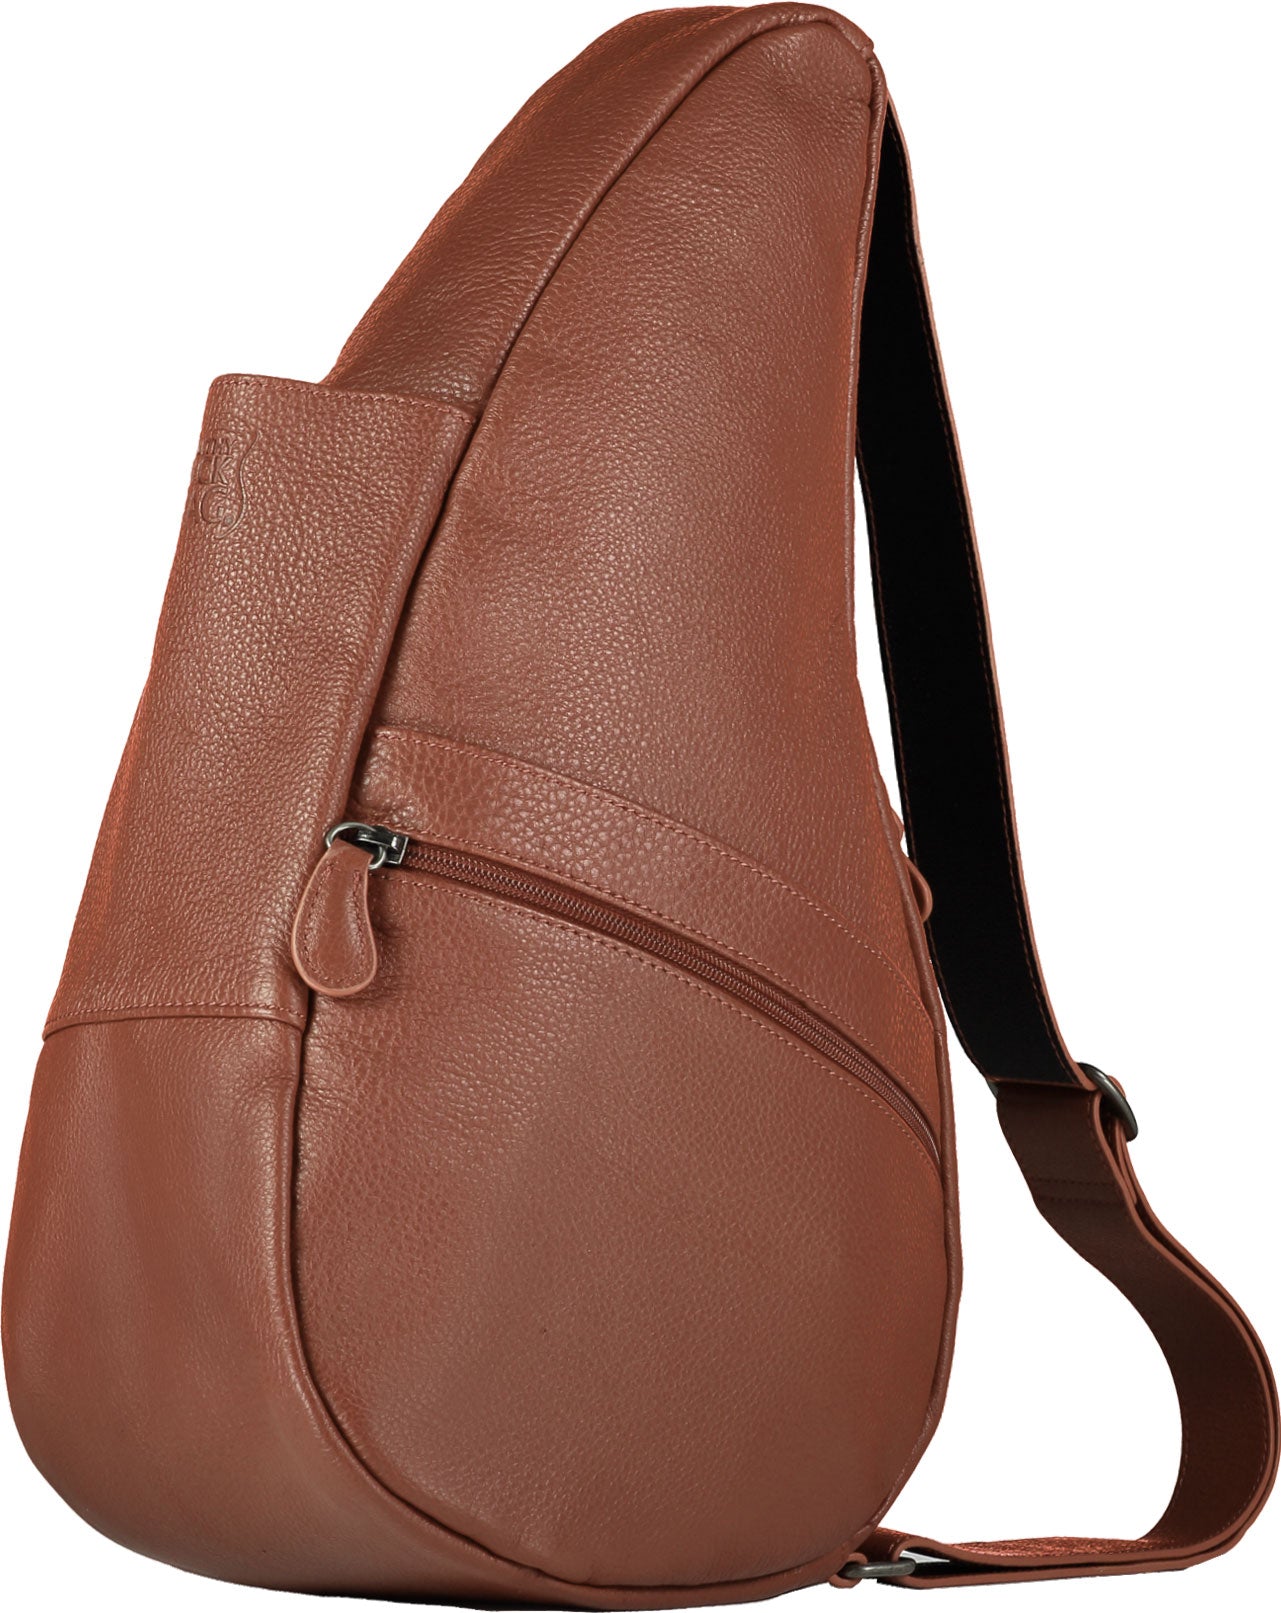 AmeriBag Healthy Back Bag tote Leather Medium (Chestnut)